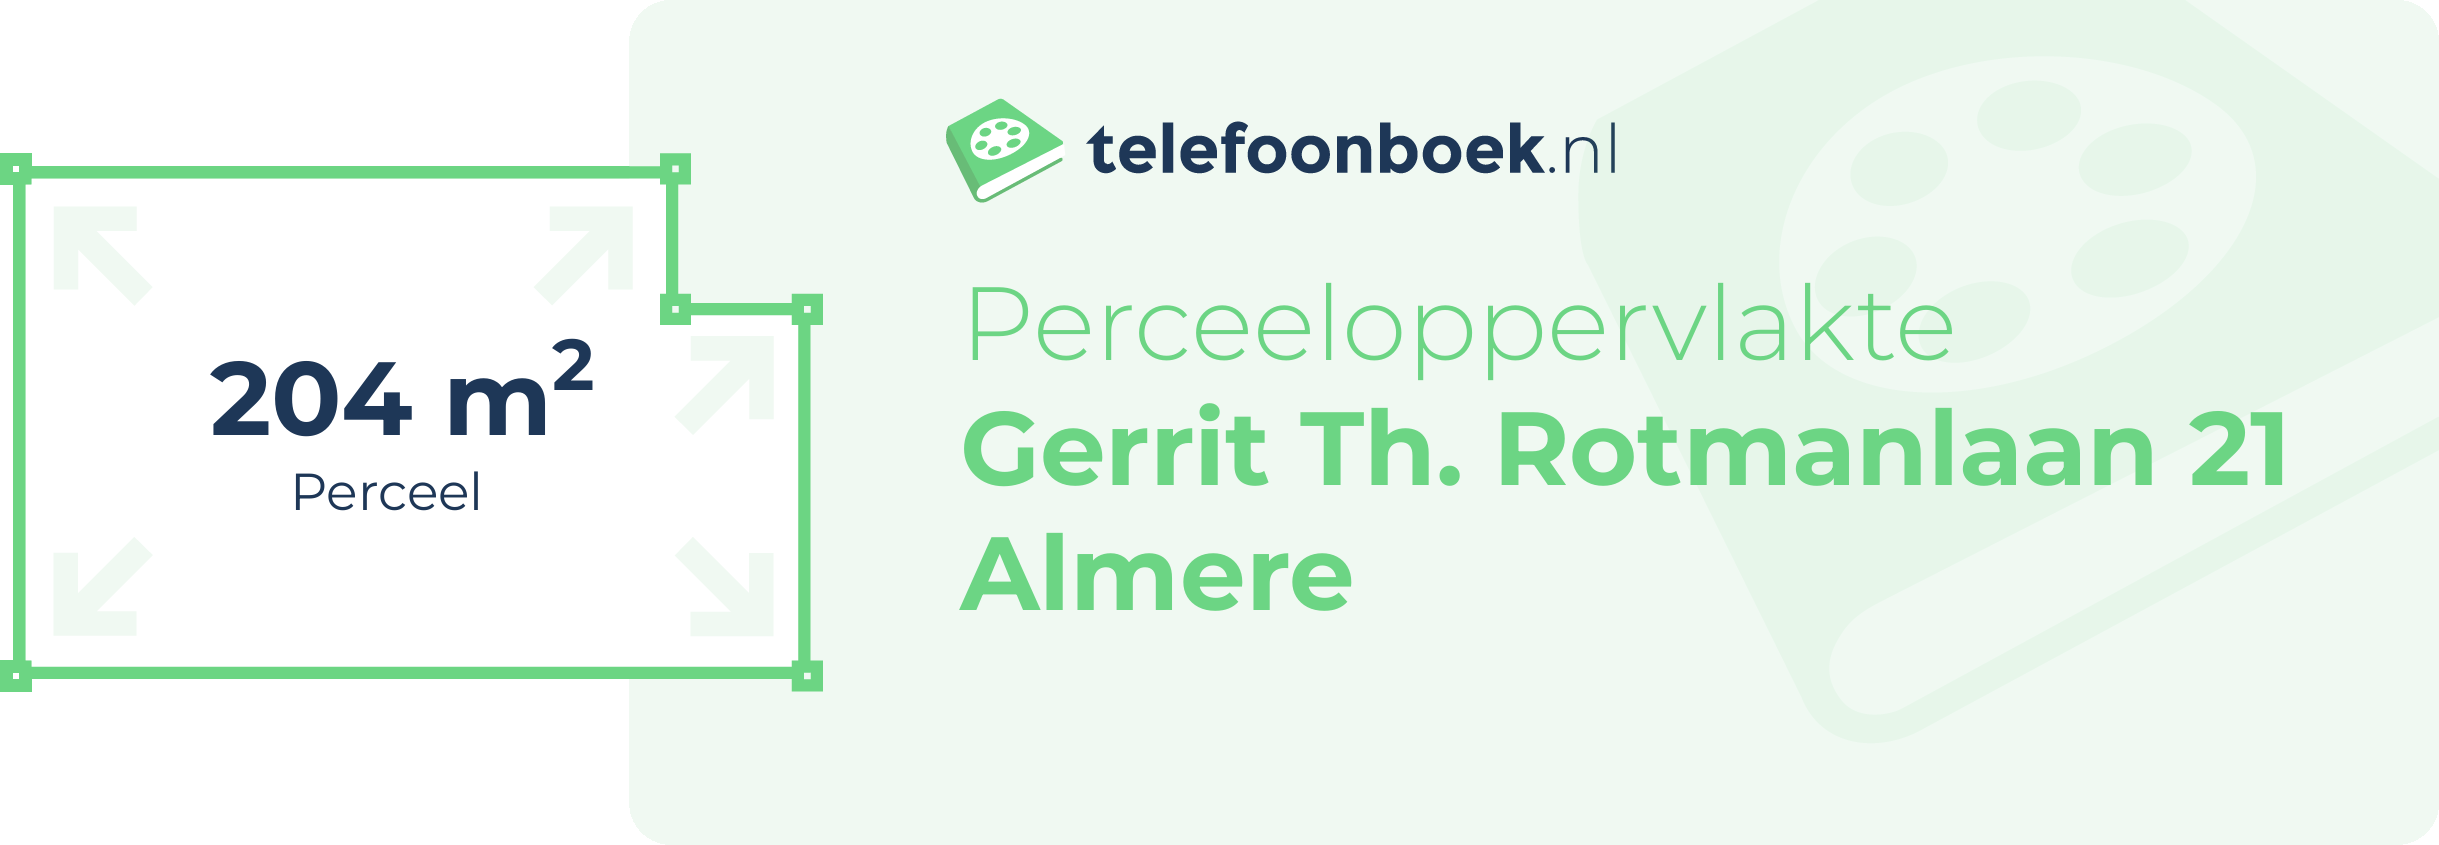 Perceeloppervlakte Gerrit Th. Rotmanlaan 21 Almere